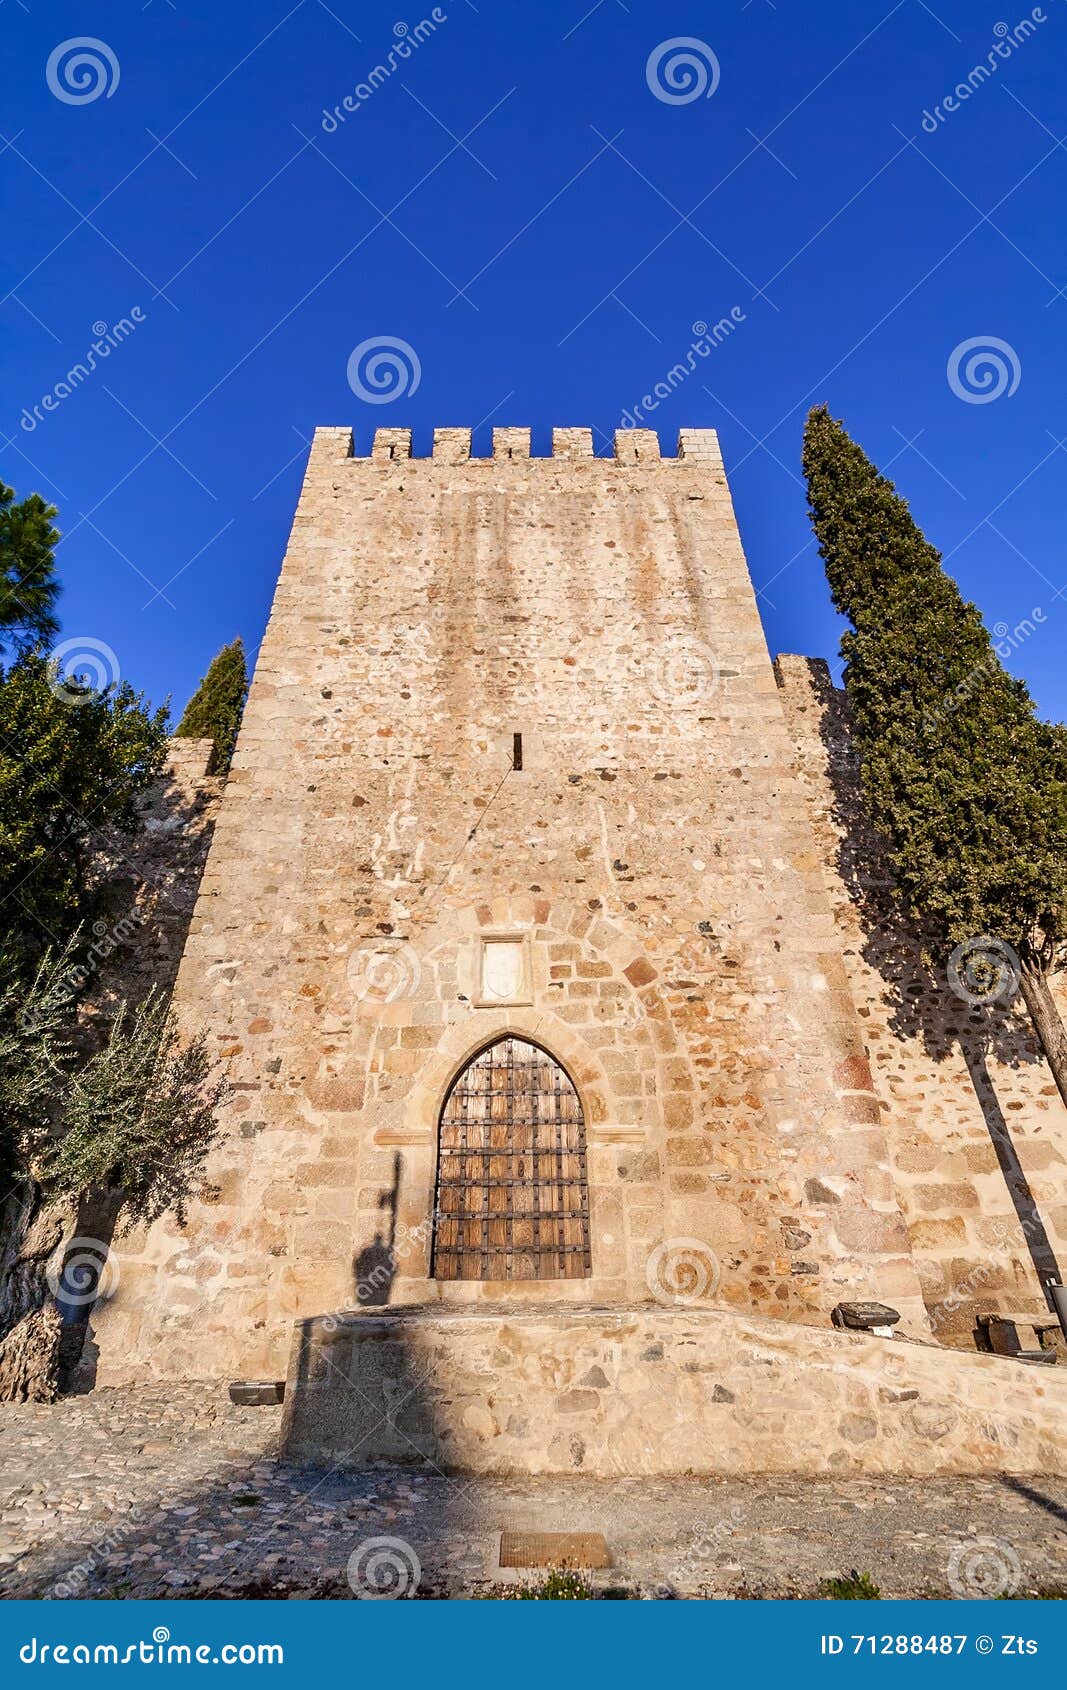 medieval castle of alter do chao, in the portalegre